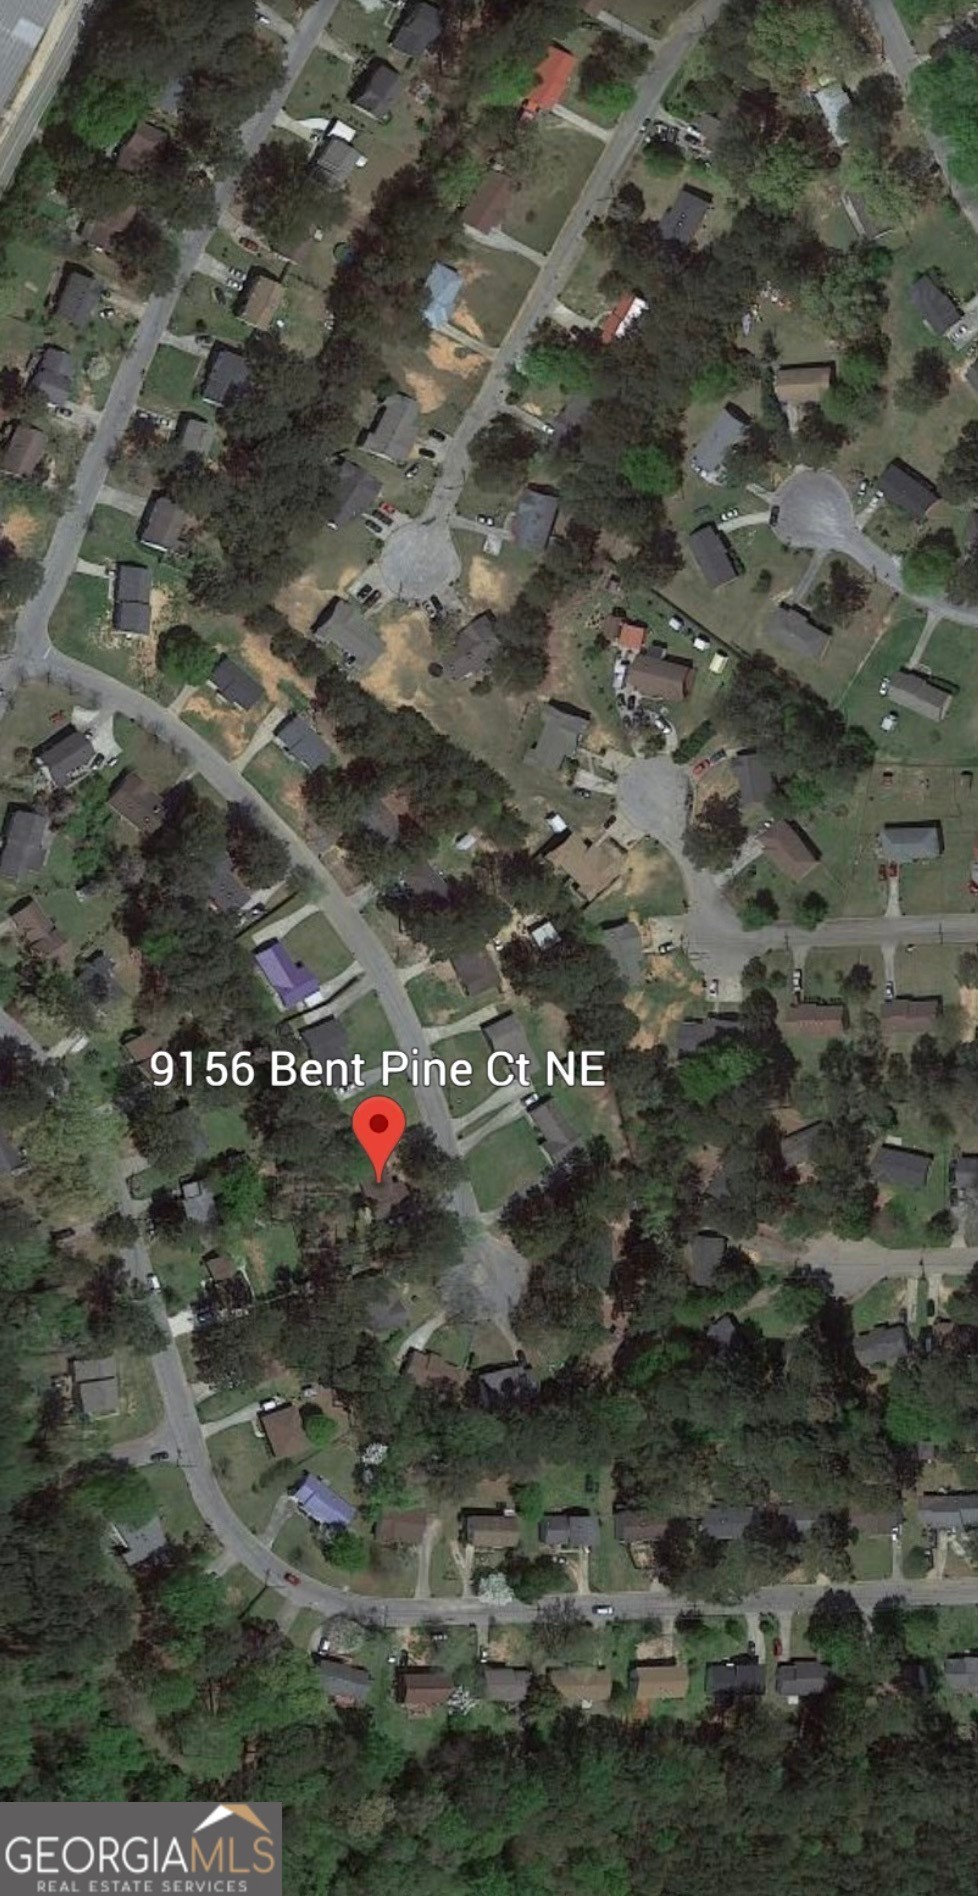 19. 9156 Bent Pine Ct NE